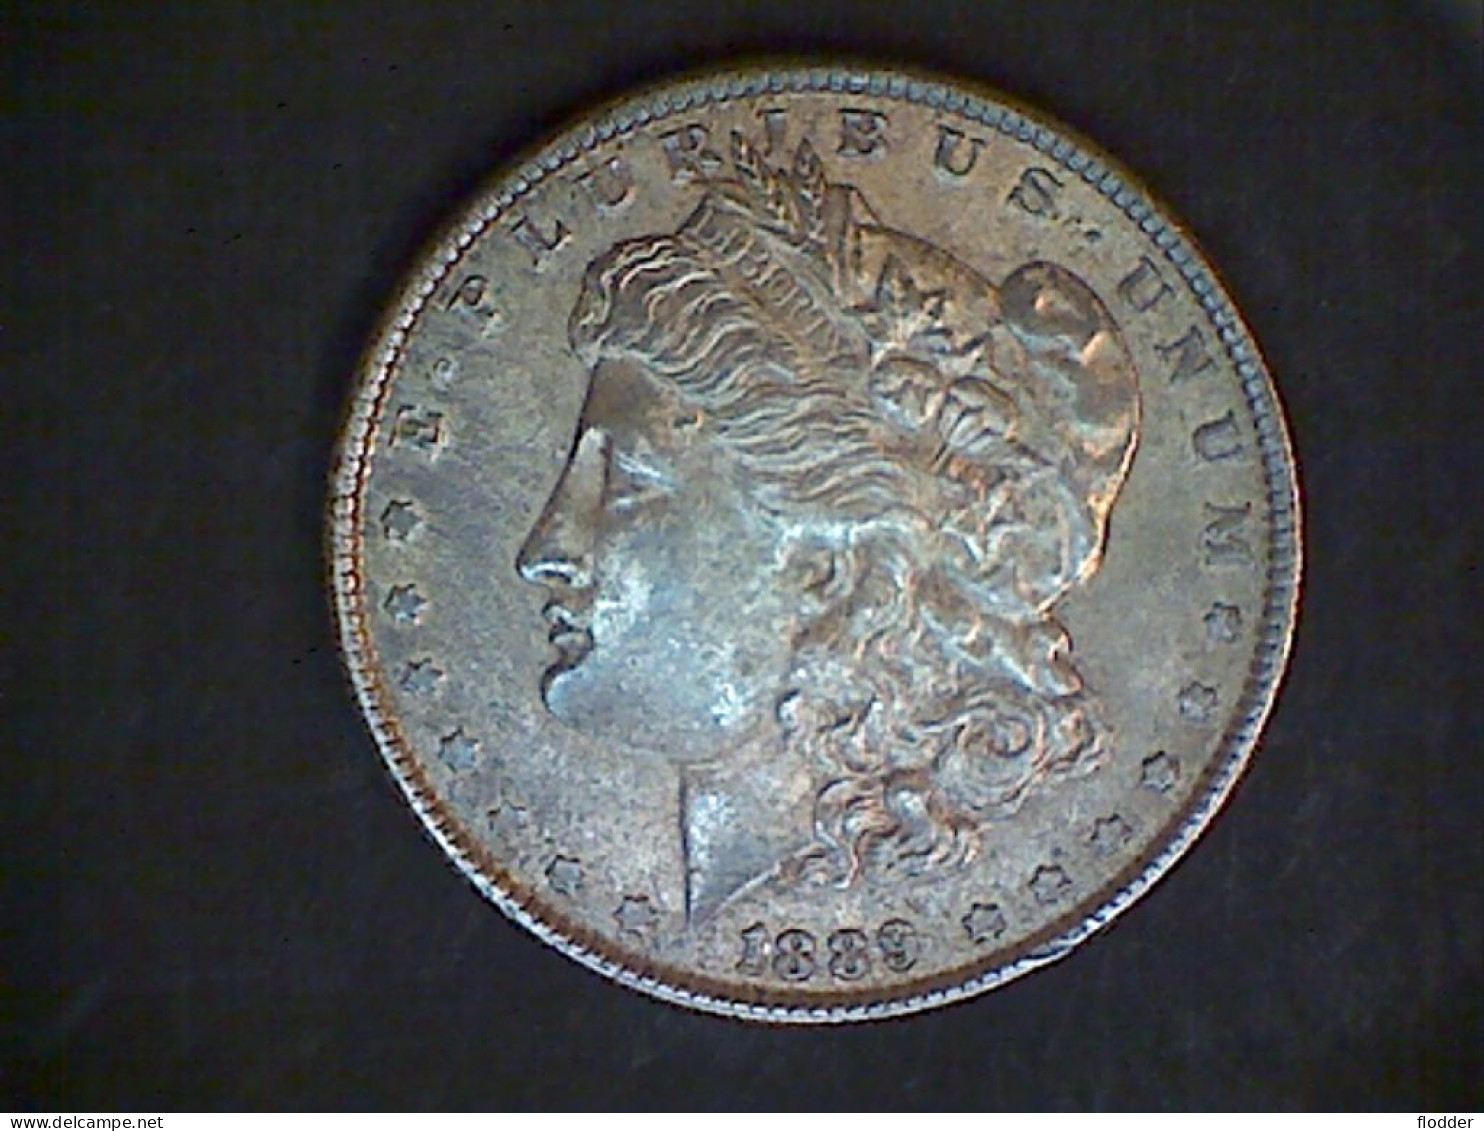 1 Dollar 1889, Mooie Patina - 1878-1921: Morgan